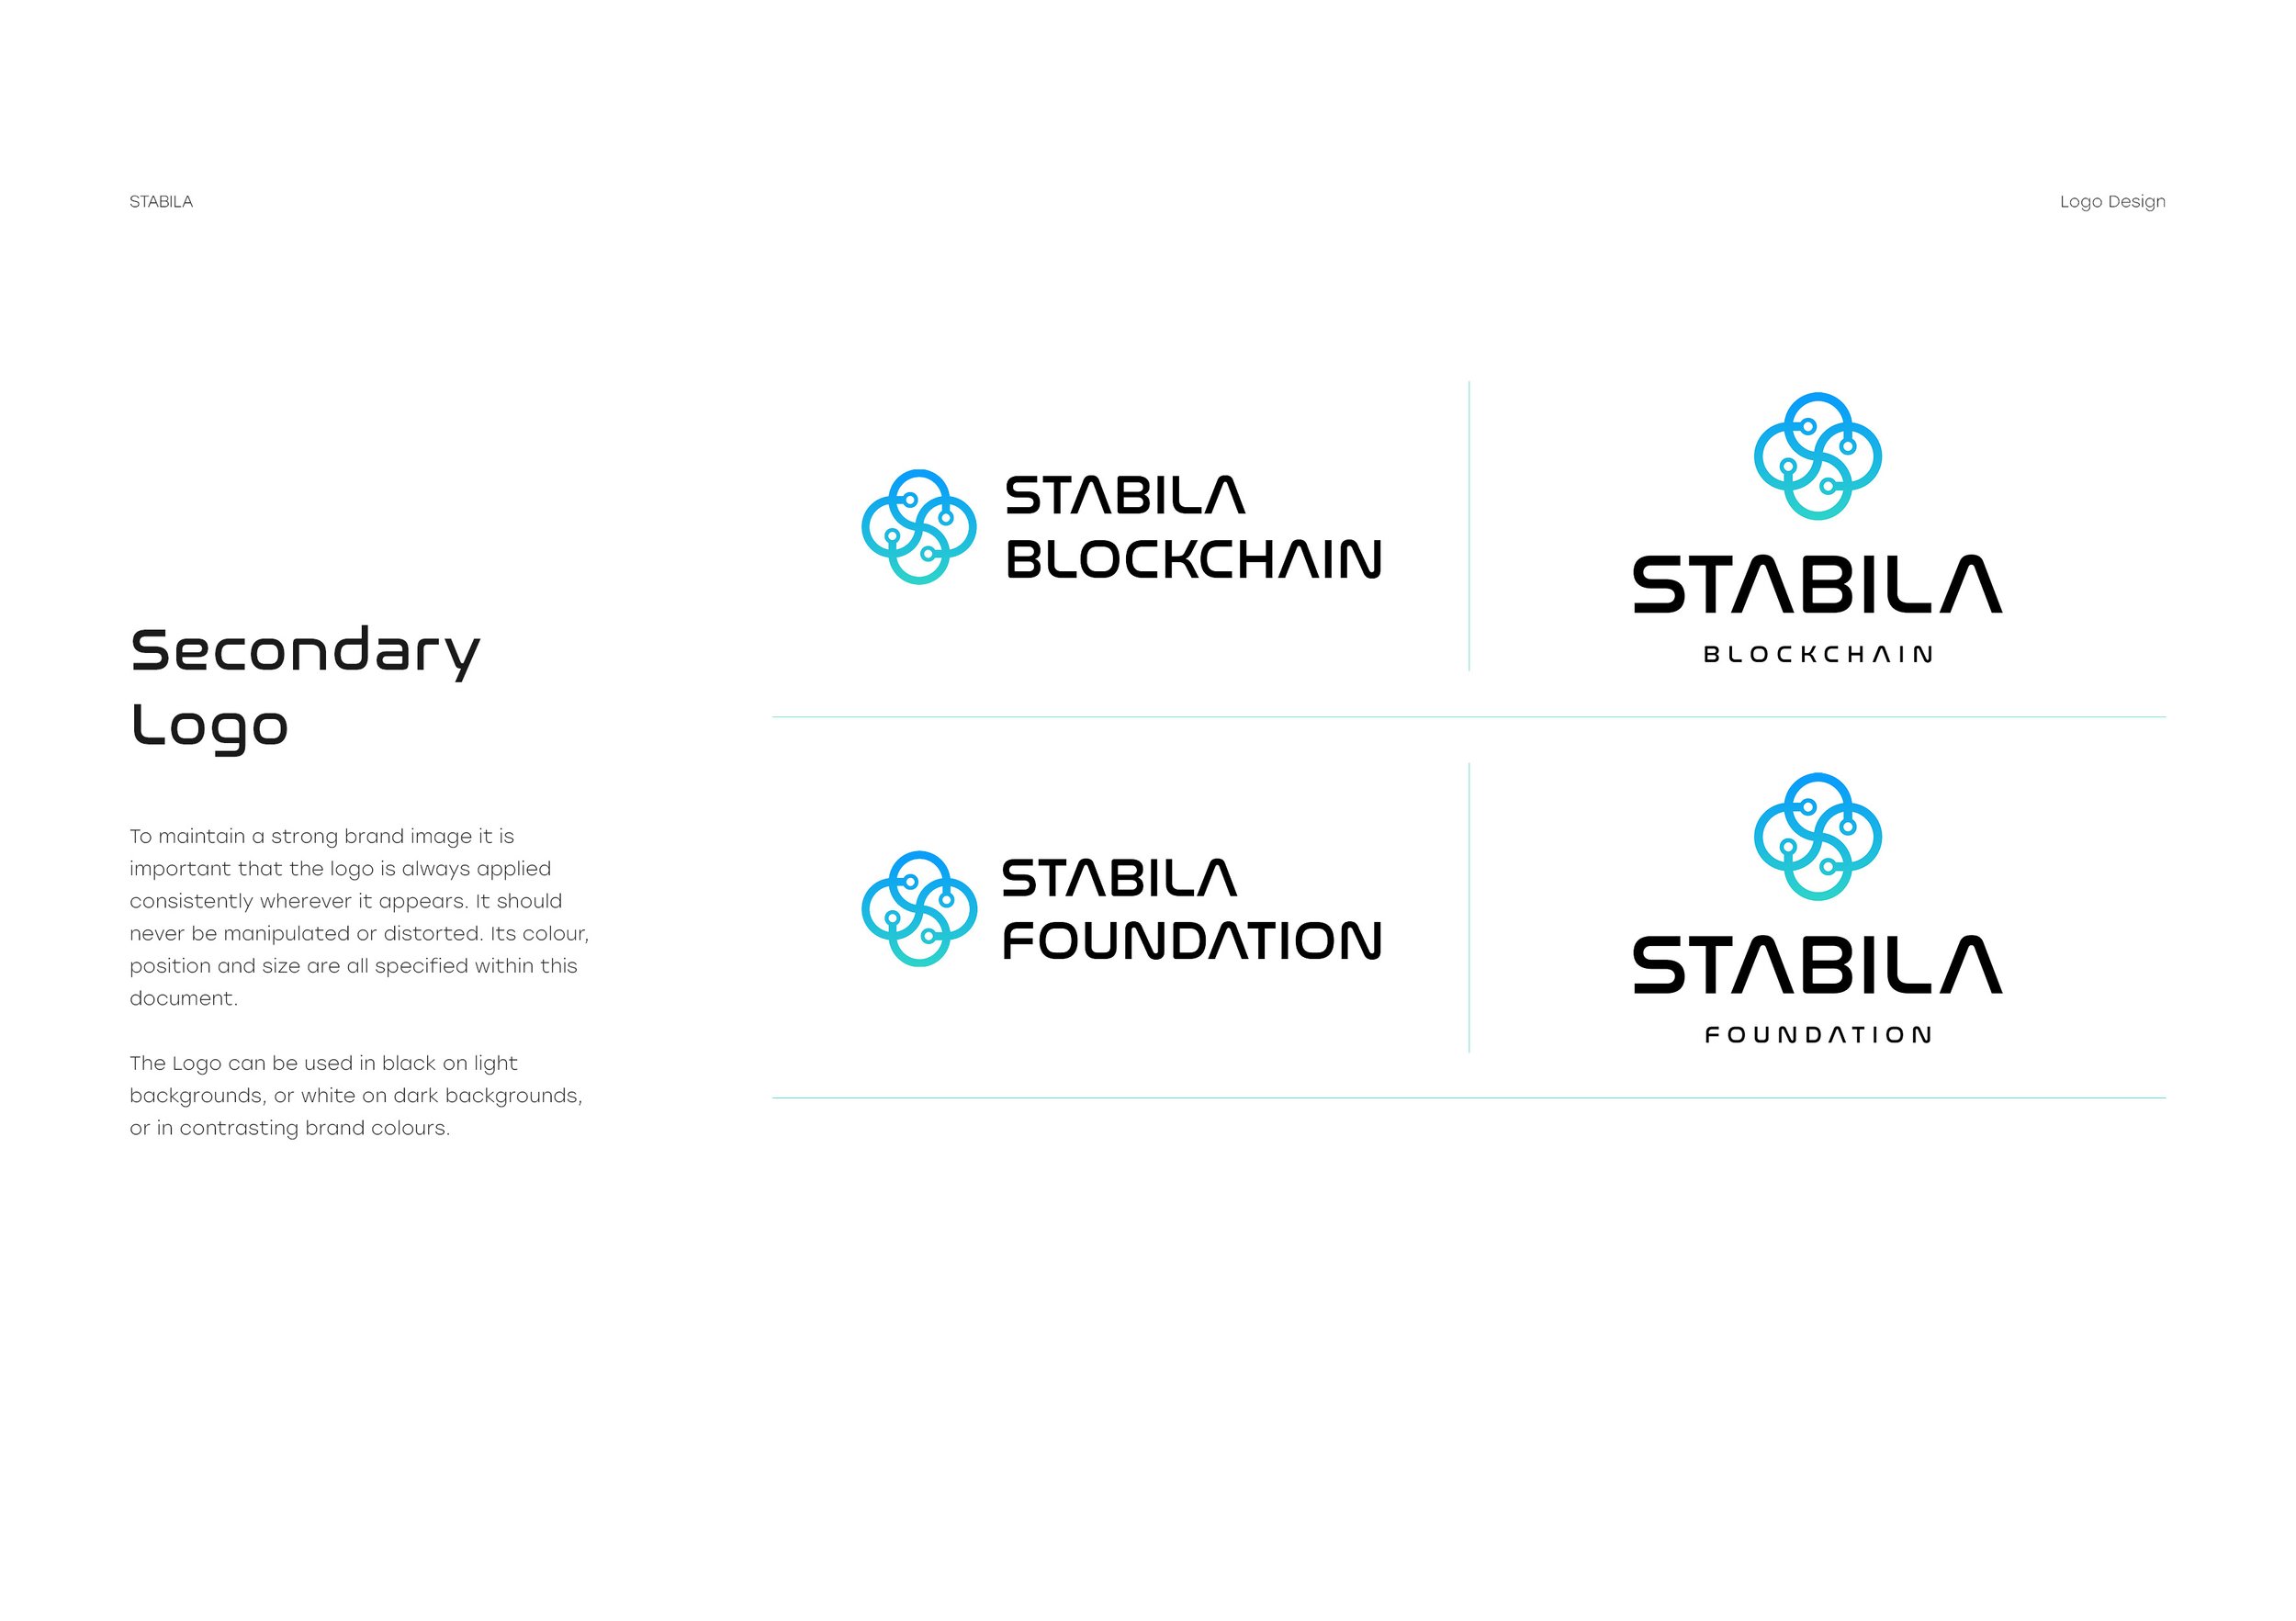 Stabila Blockchain - Brand Identity12.jpg